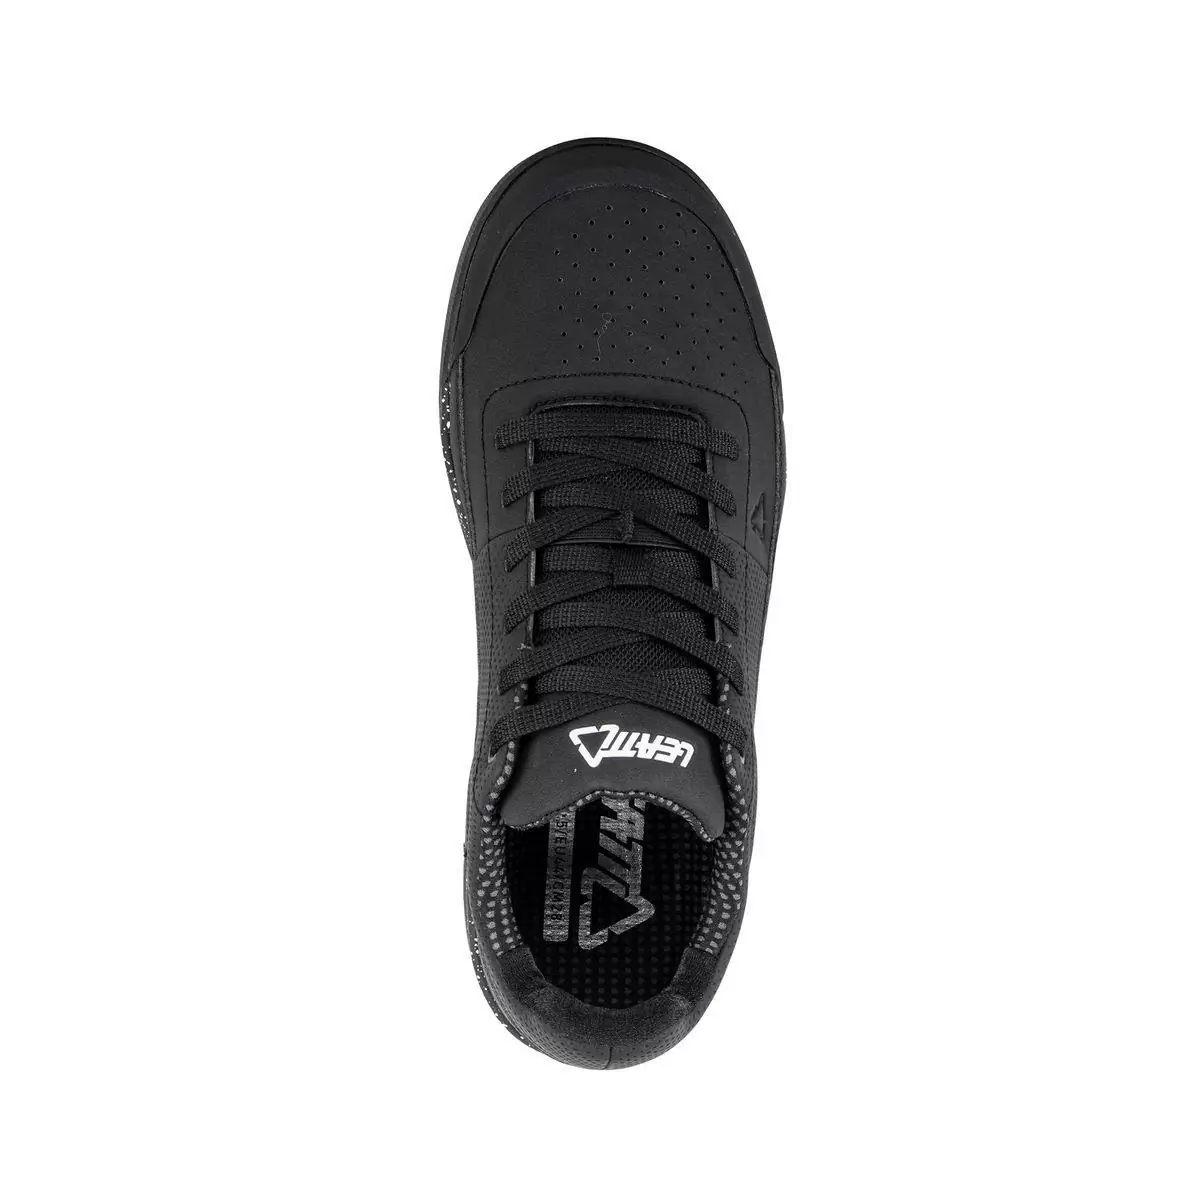 Mtb Shoes 2.0 Flat Black Size 48.5 #2